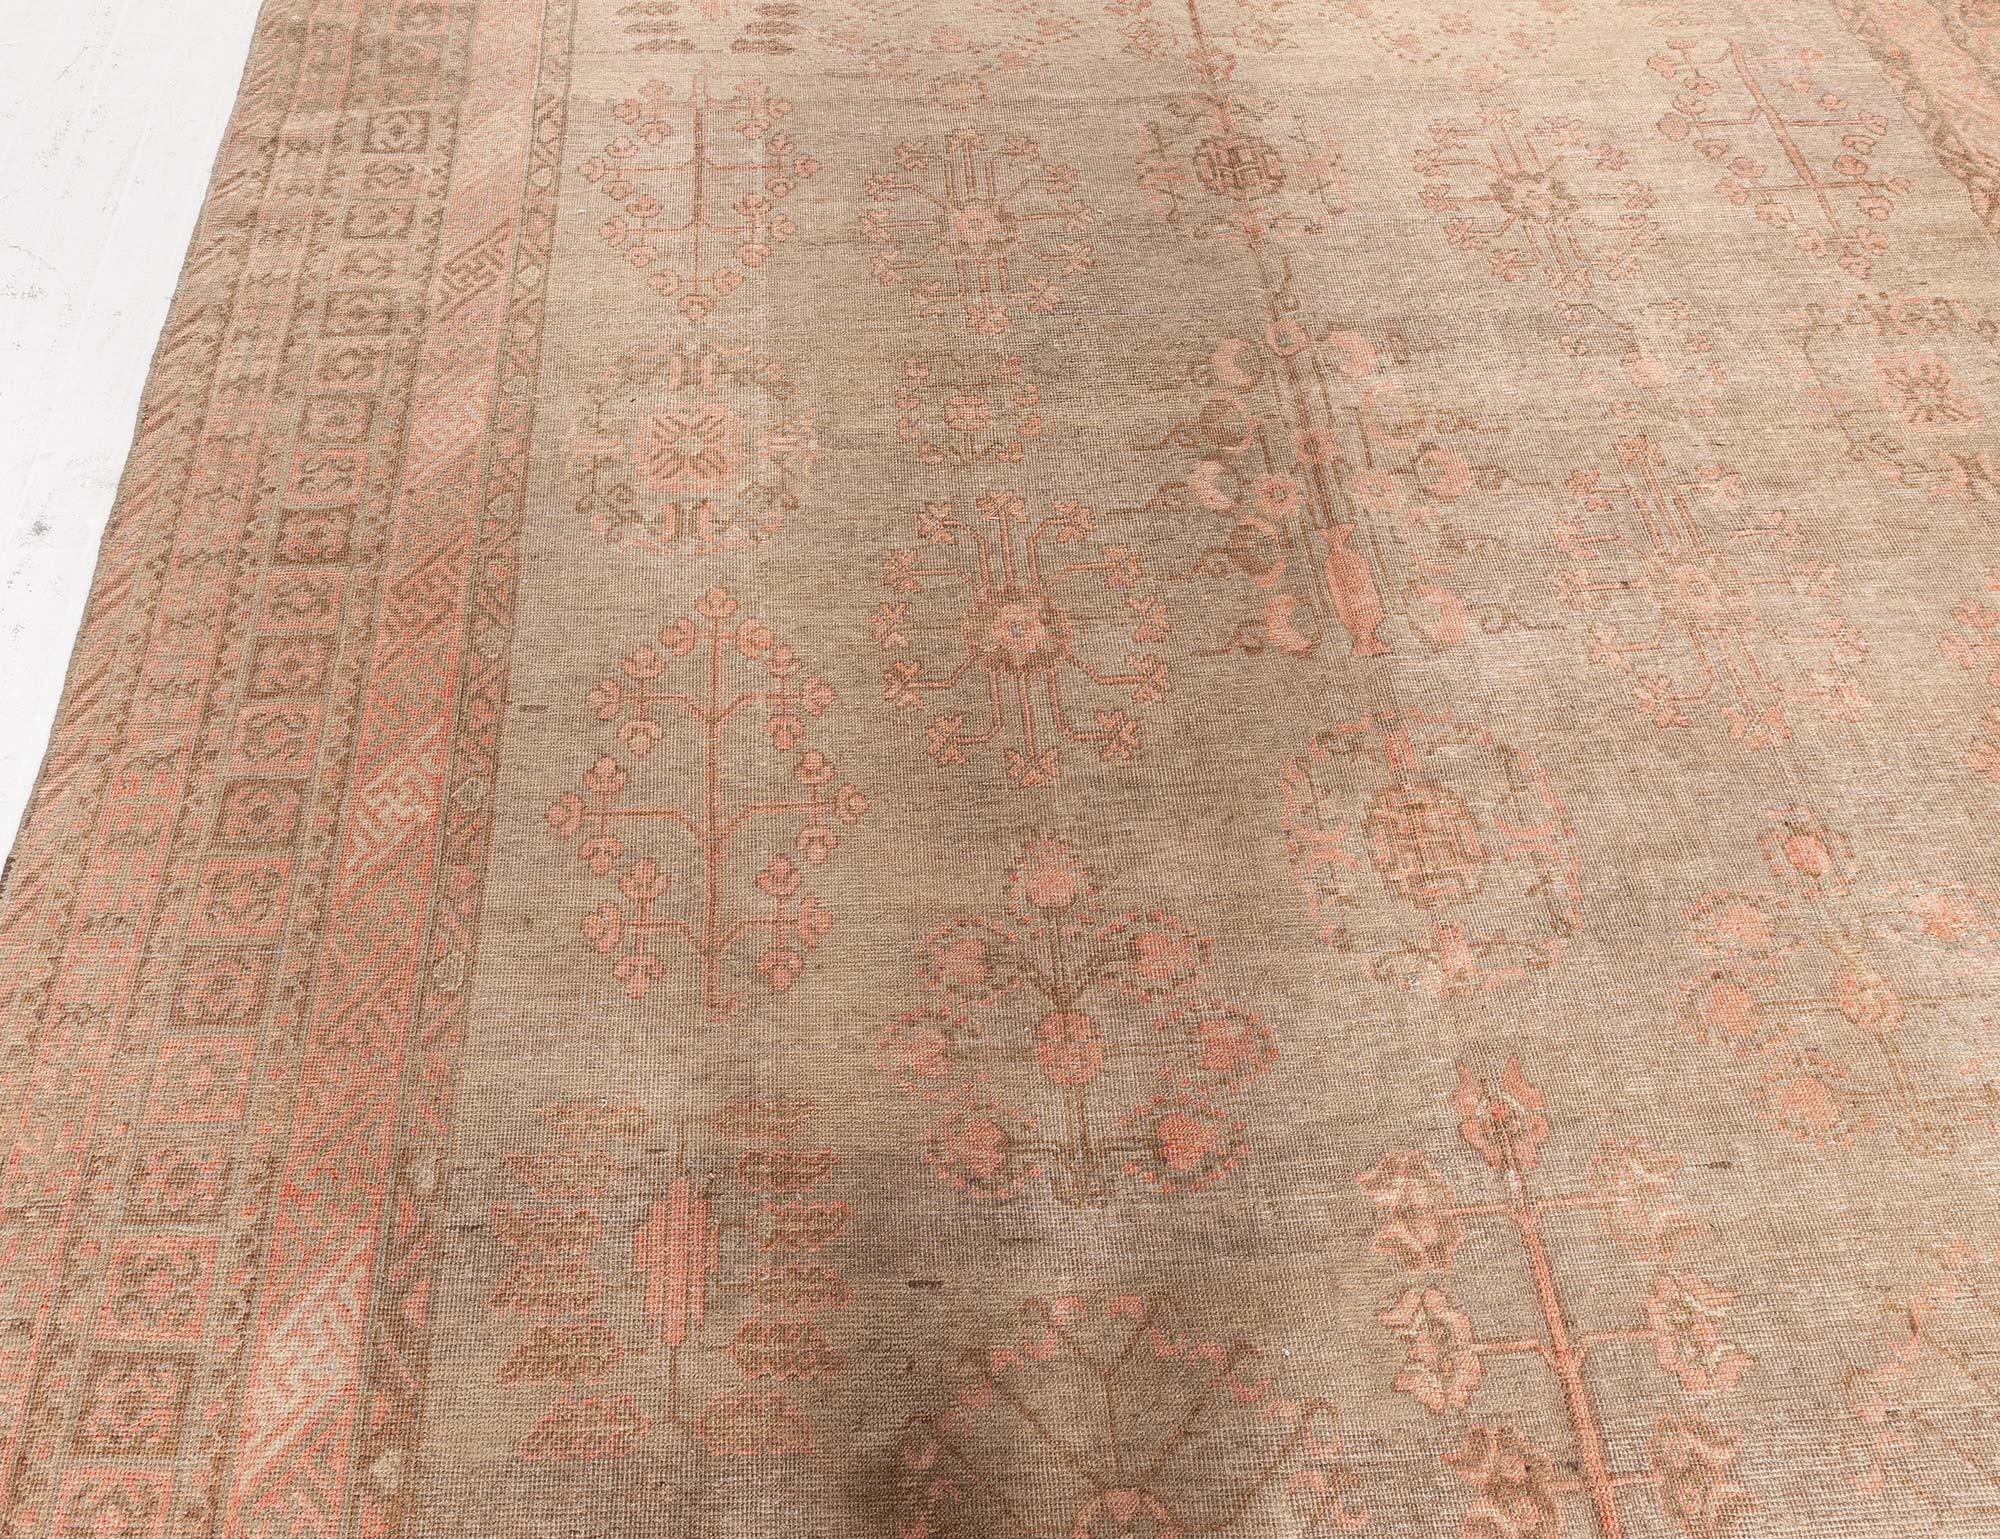 Mid-20th Century Samarkand Handmade Wool Rug
Size: 8'10